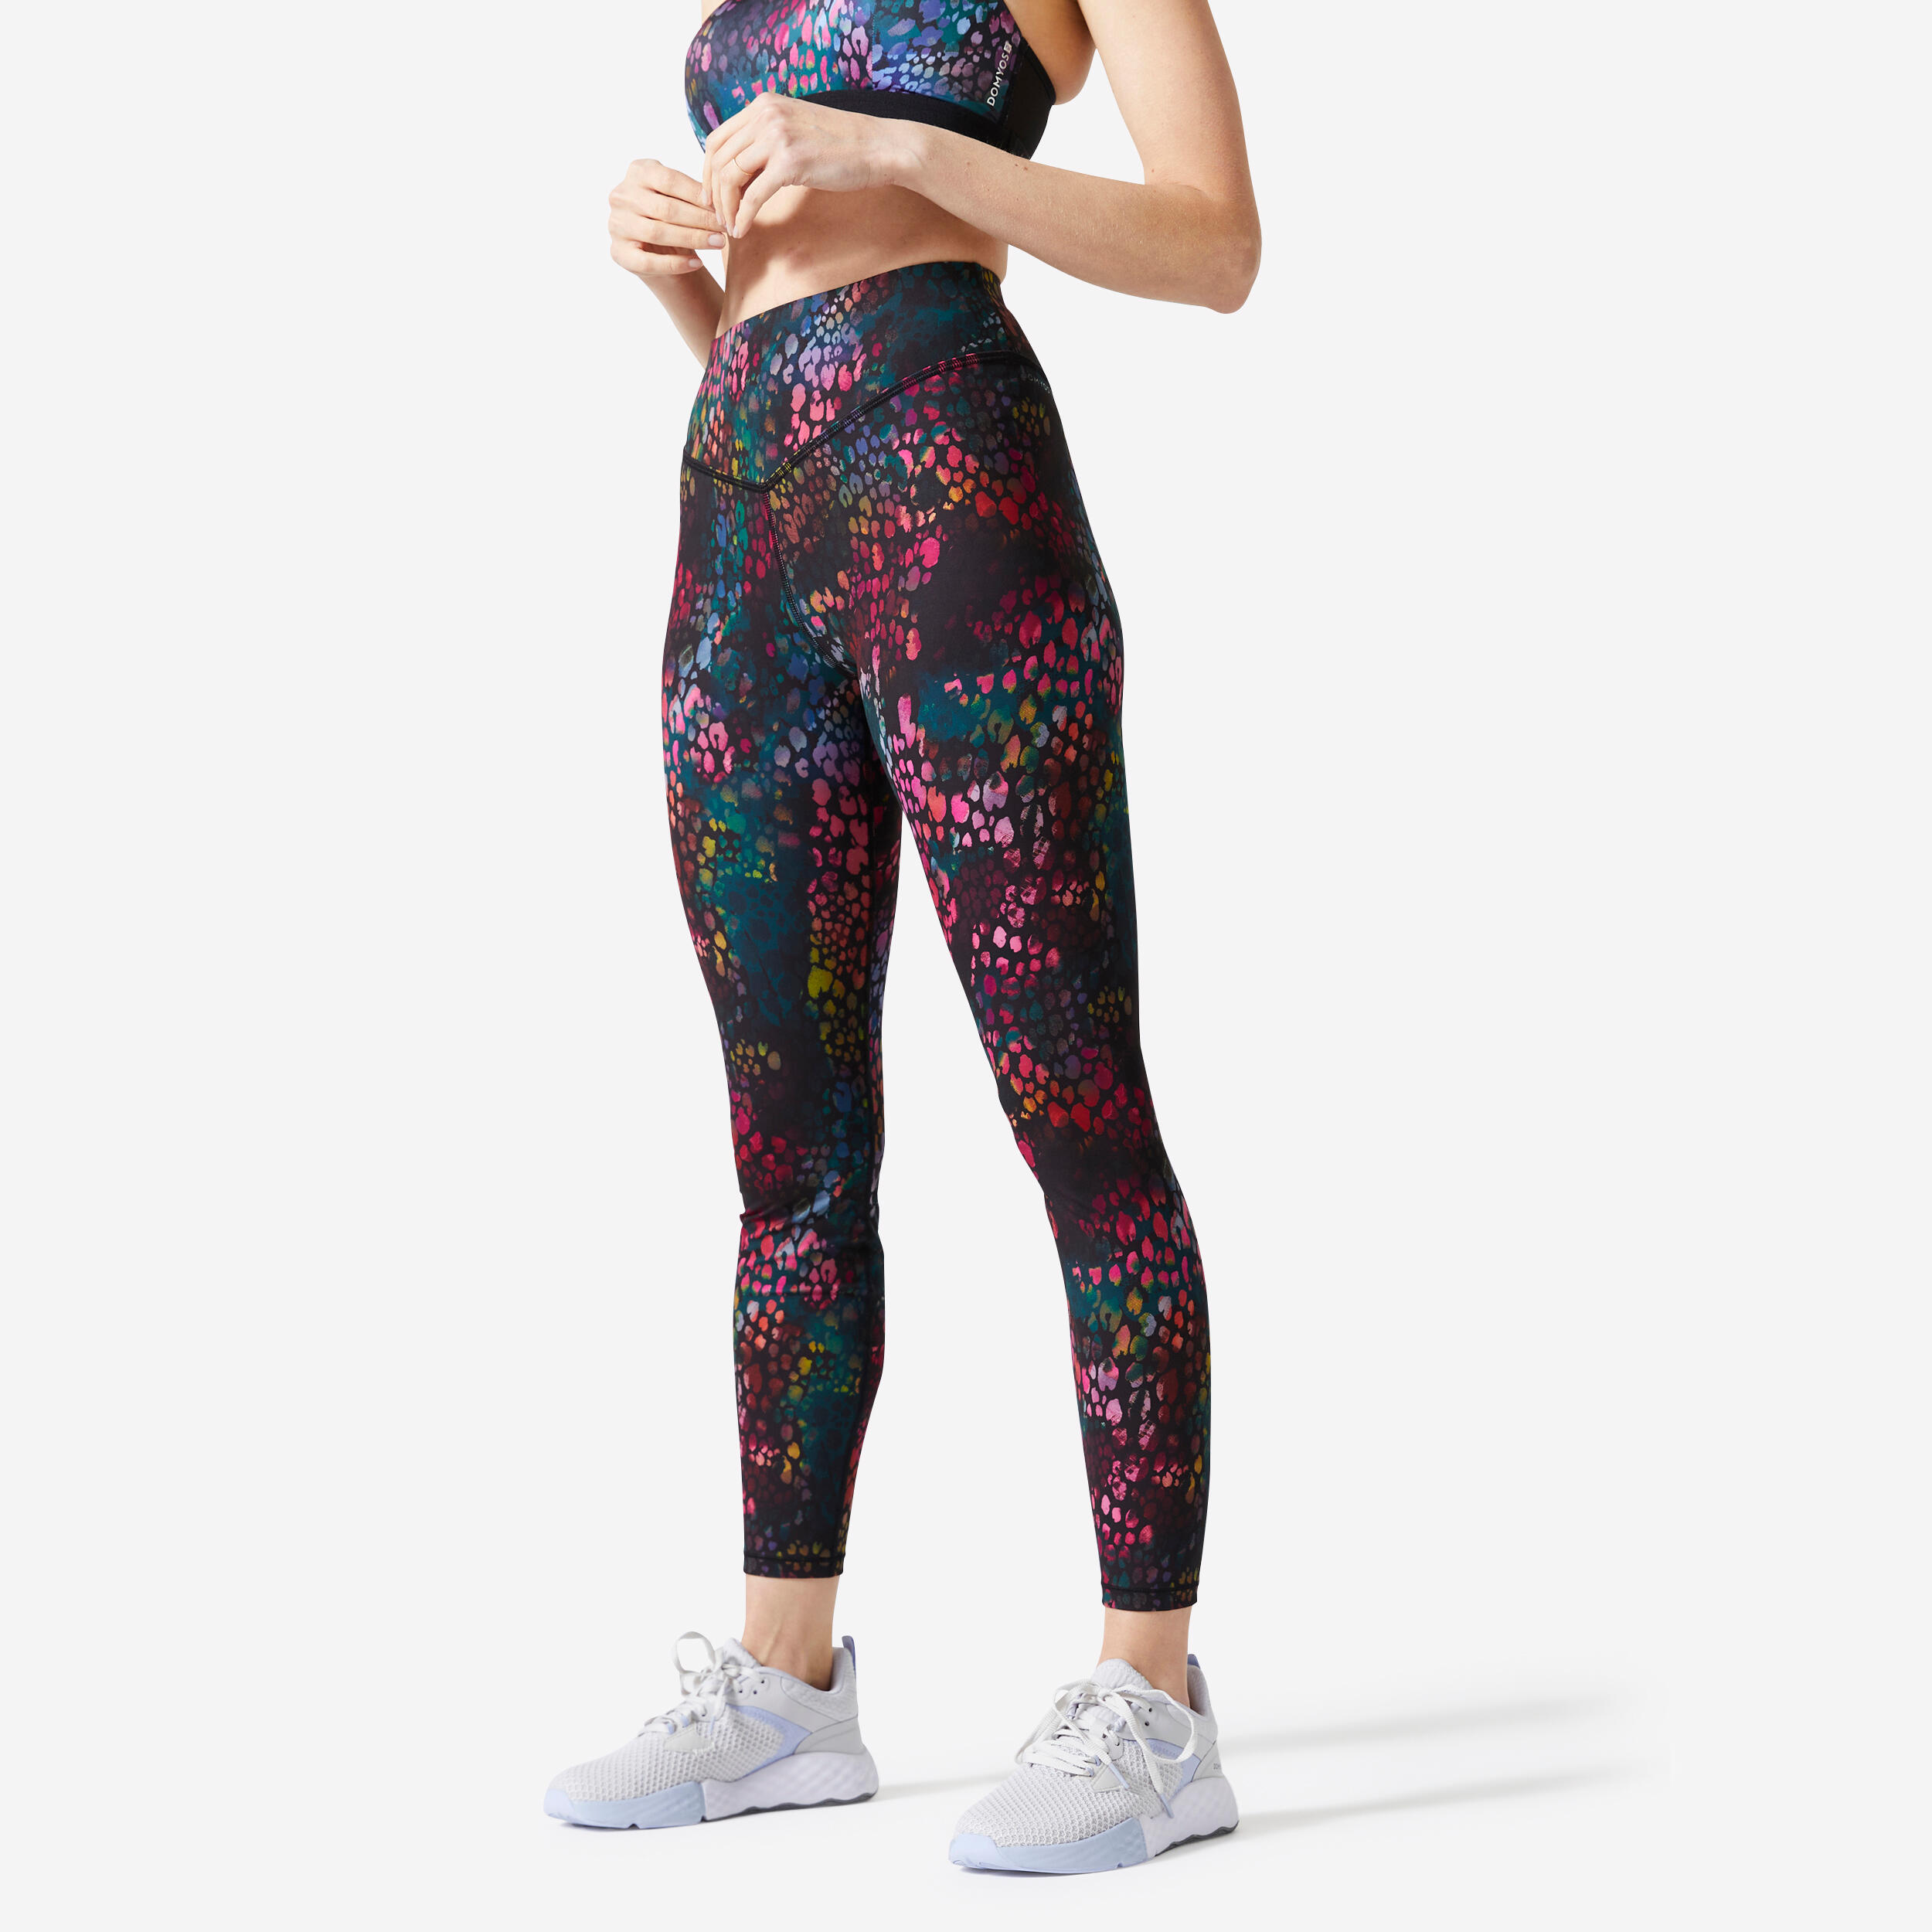 ZFLL Leggings,Yoga Pants Stretchy High Waist Snake Printed Workout Tights  Sport Women Push Up Legging Gym Leggins Acitve Running,PD389 Red,One Size